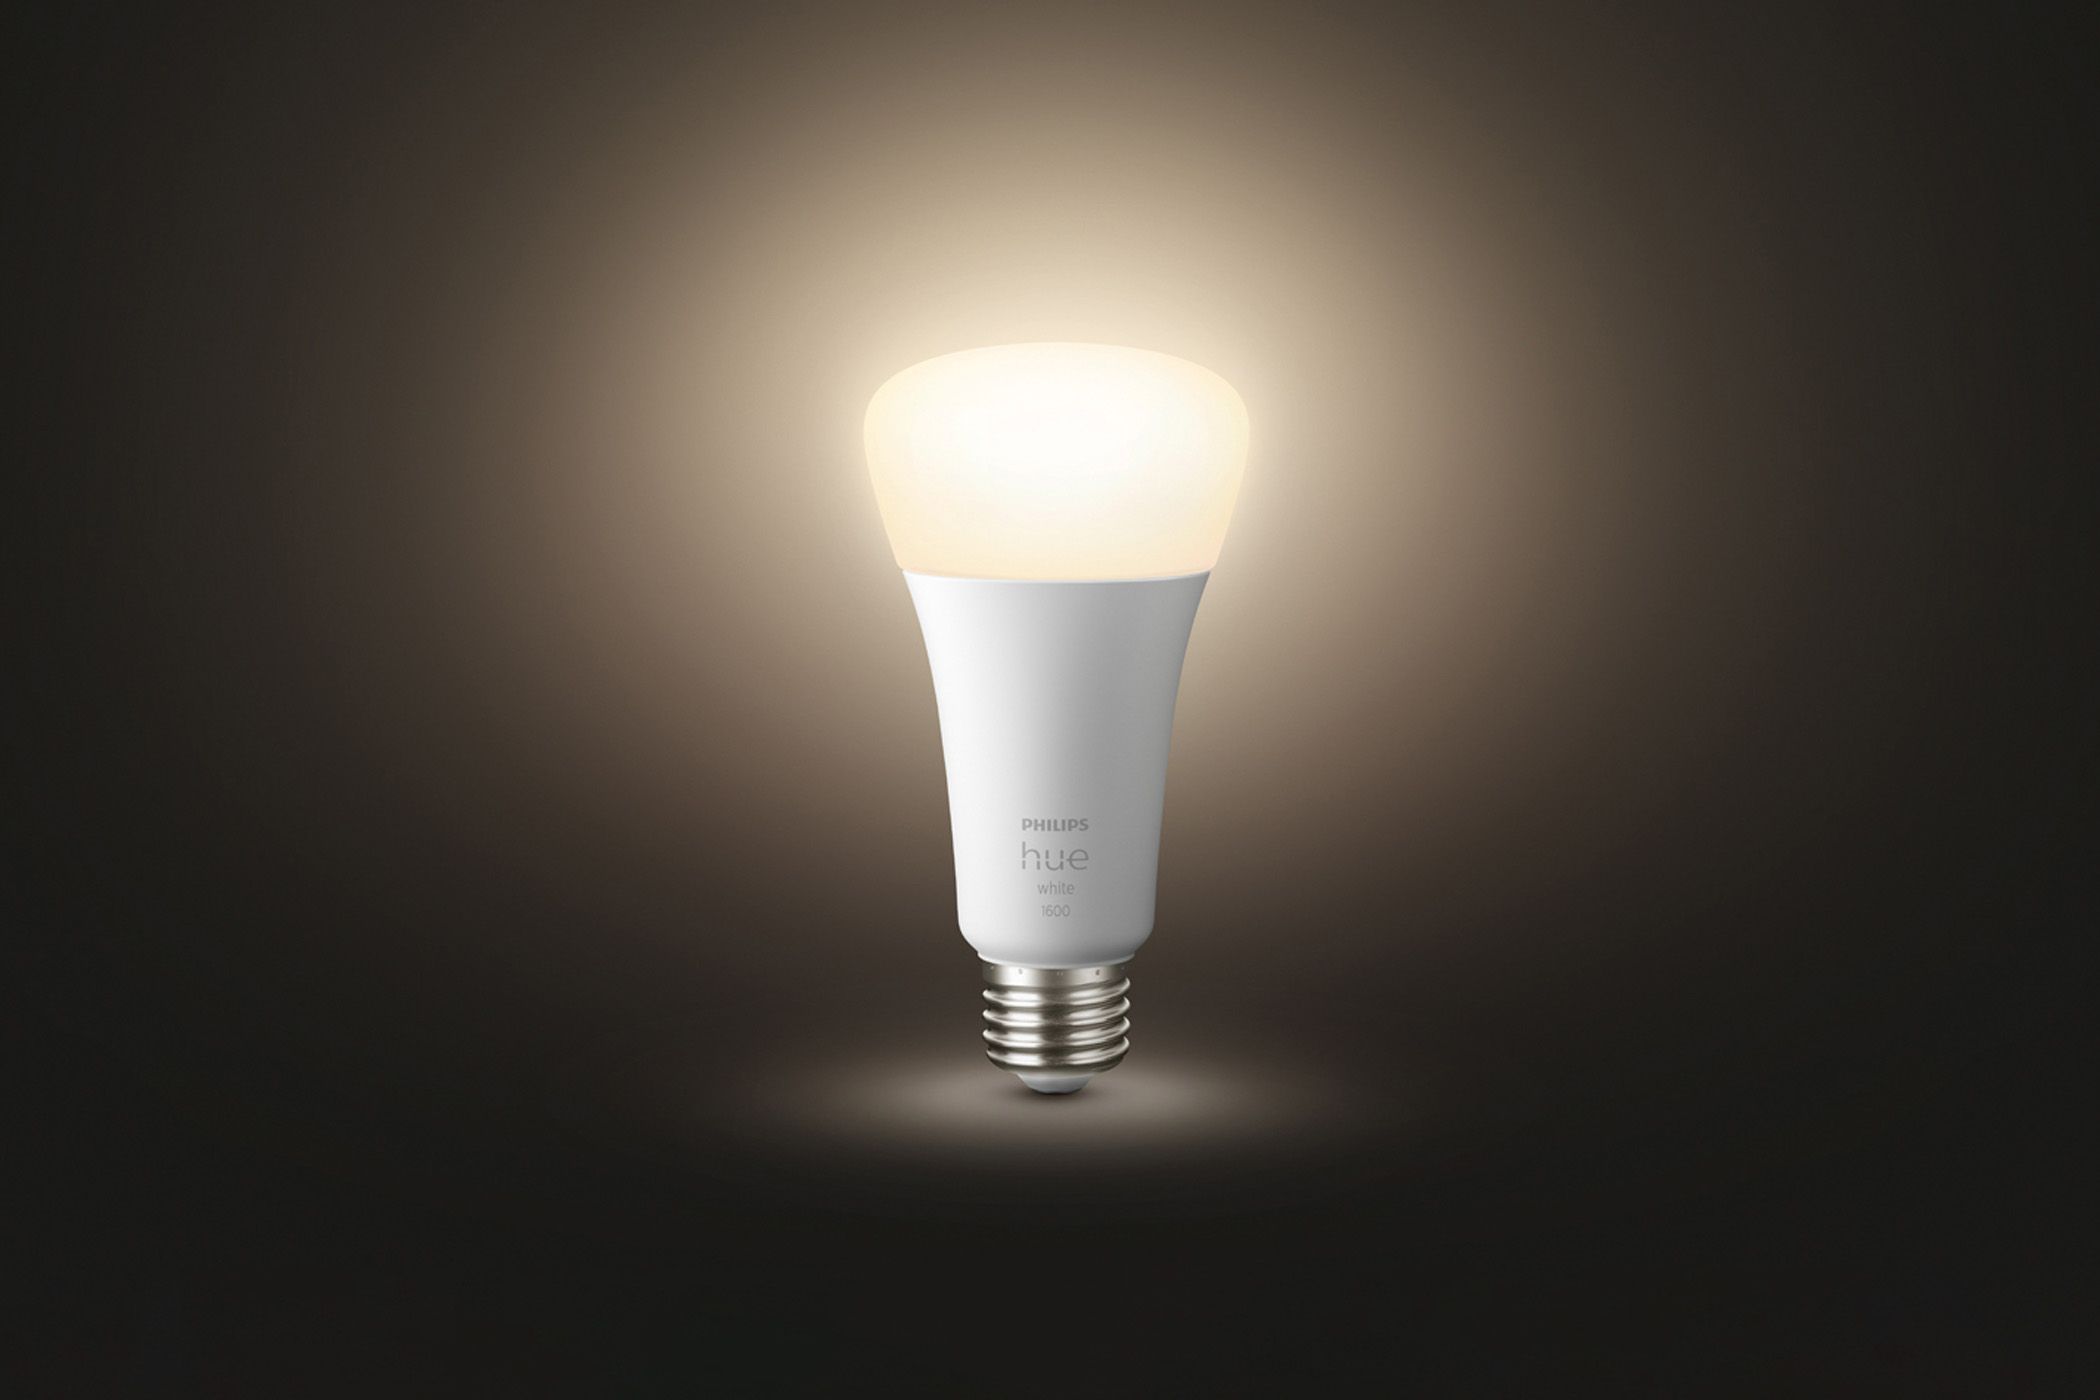 Philips Hue smart light